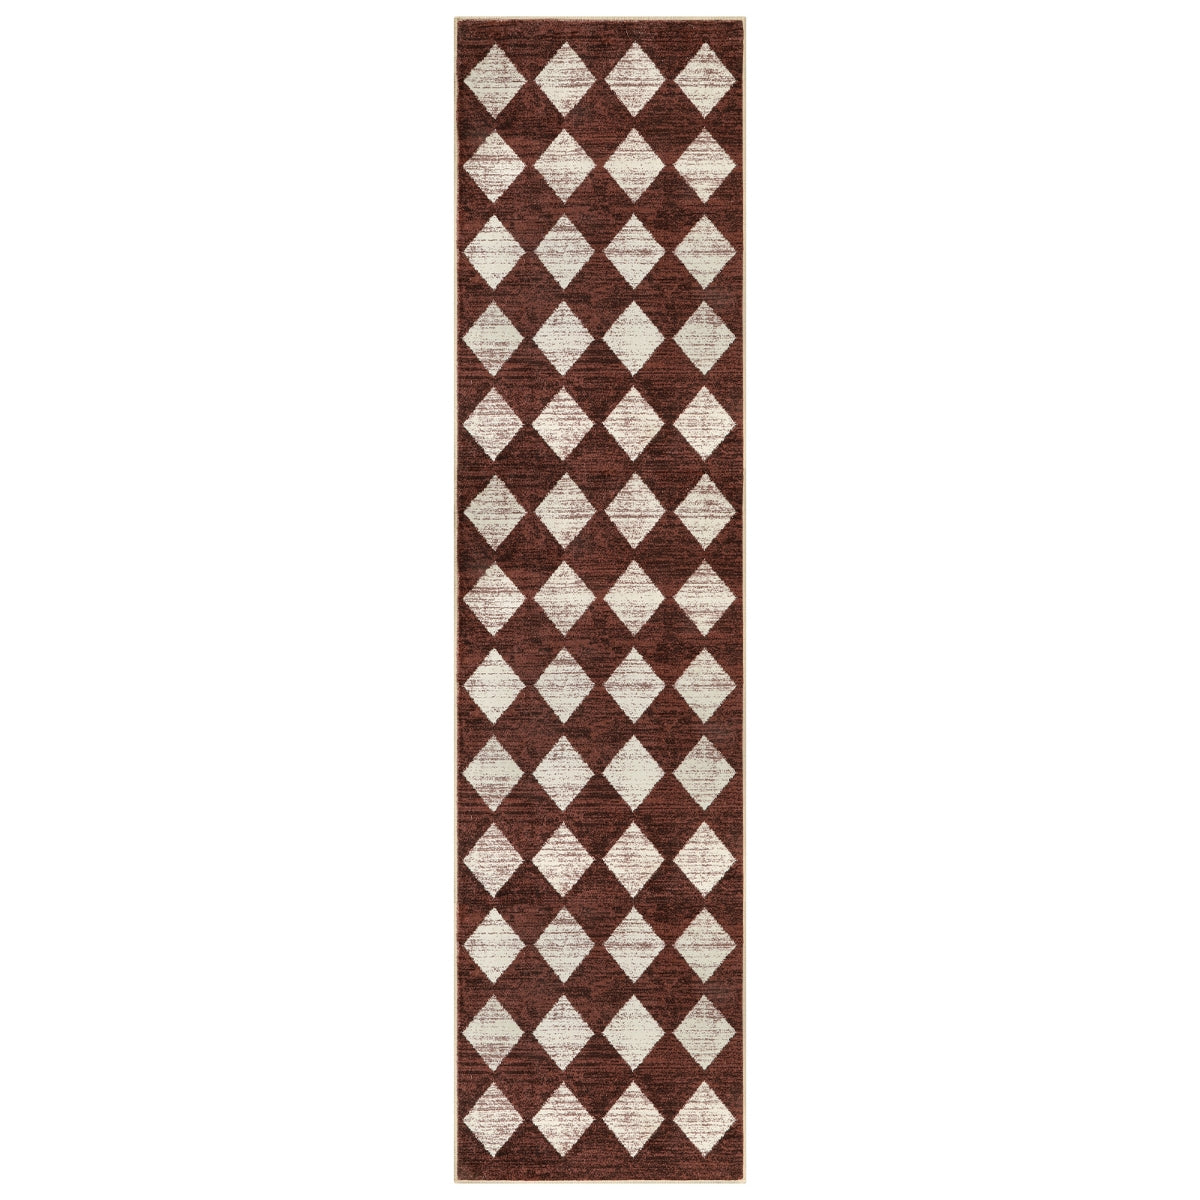 Small Soft Modern Geometric Diamond Checkered Tile Area Rug